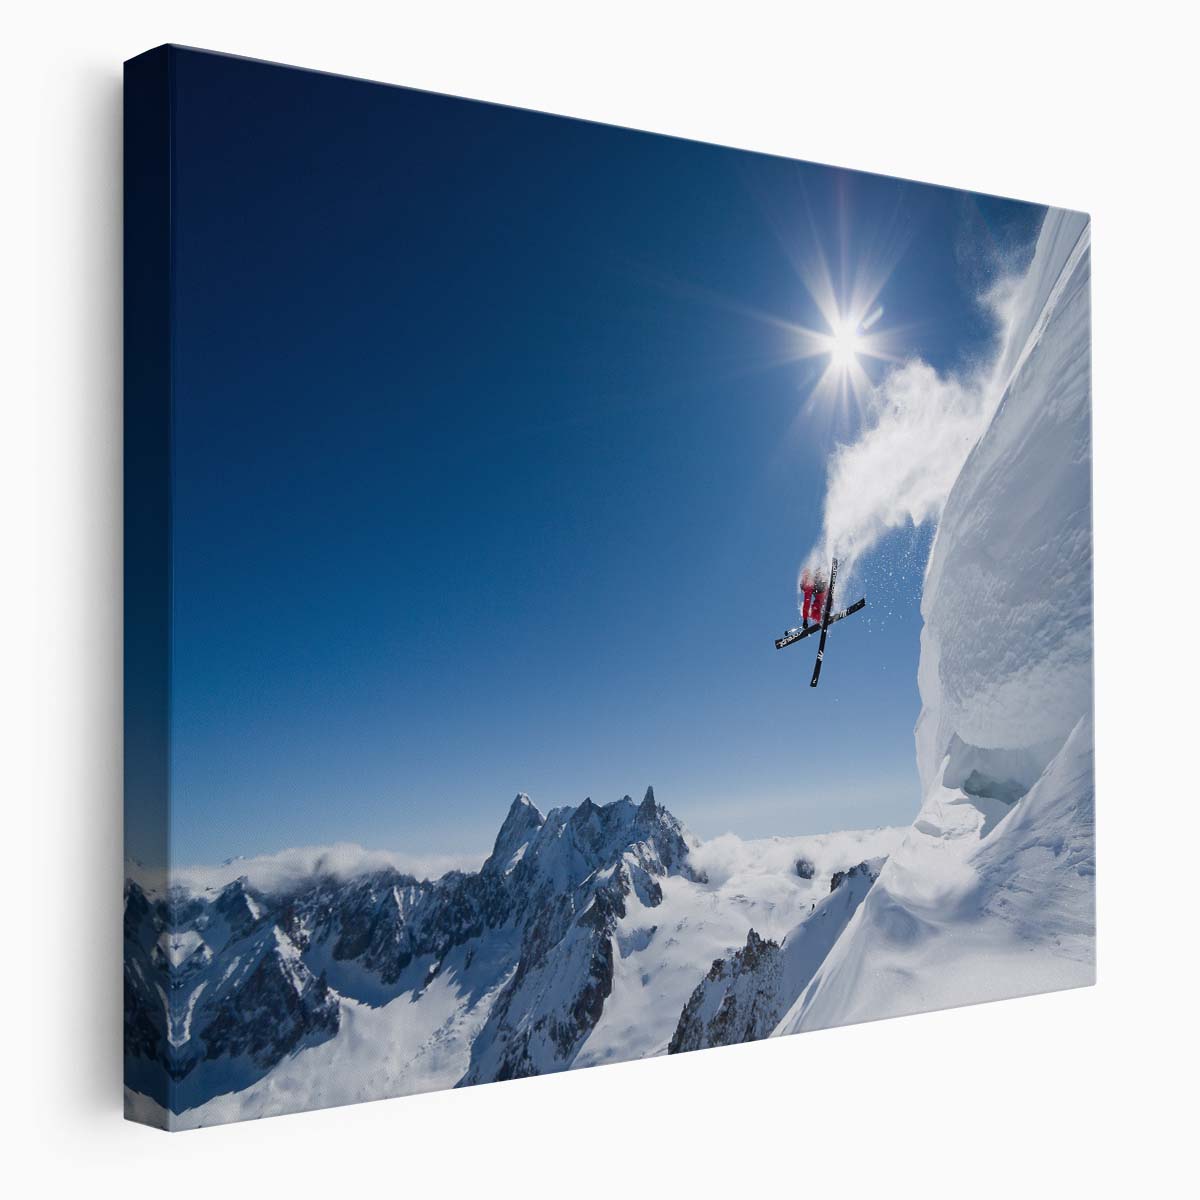 Extreme Ski Jump in Snowy Alps - Tristan Shu Wall Art